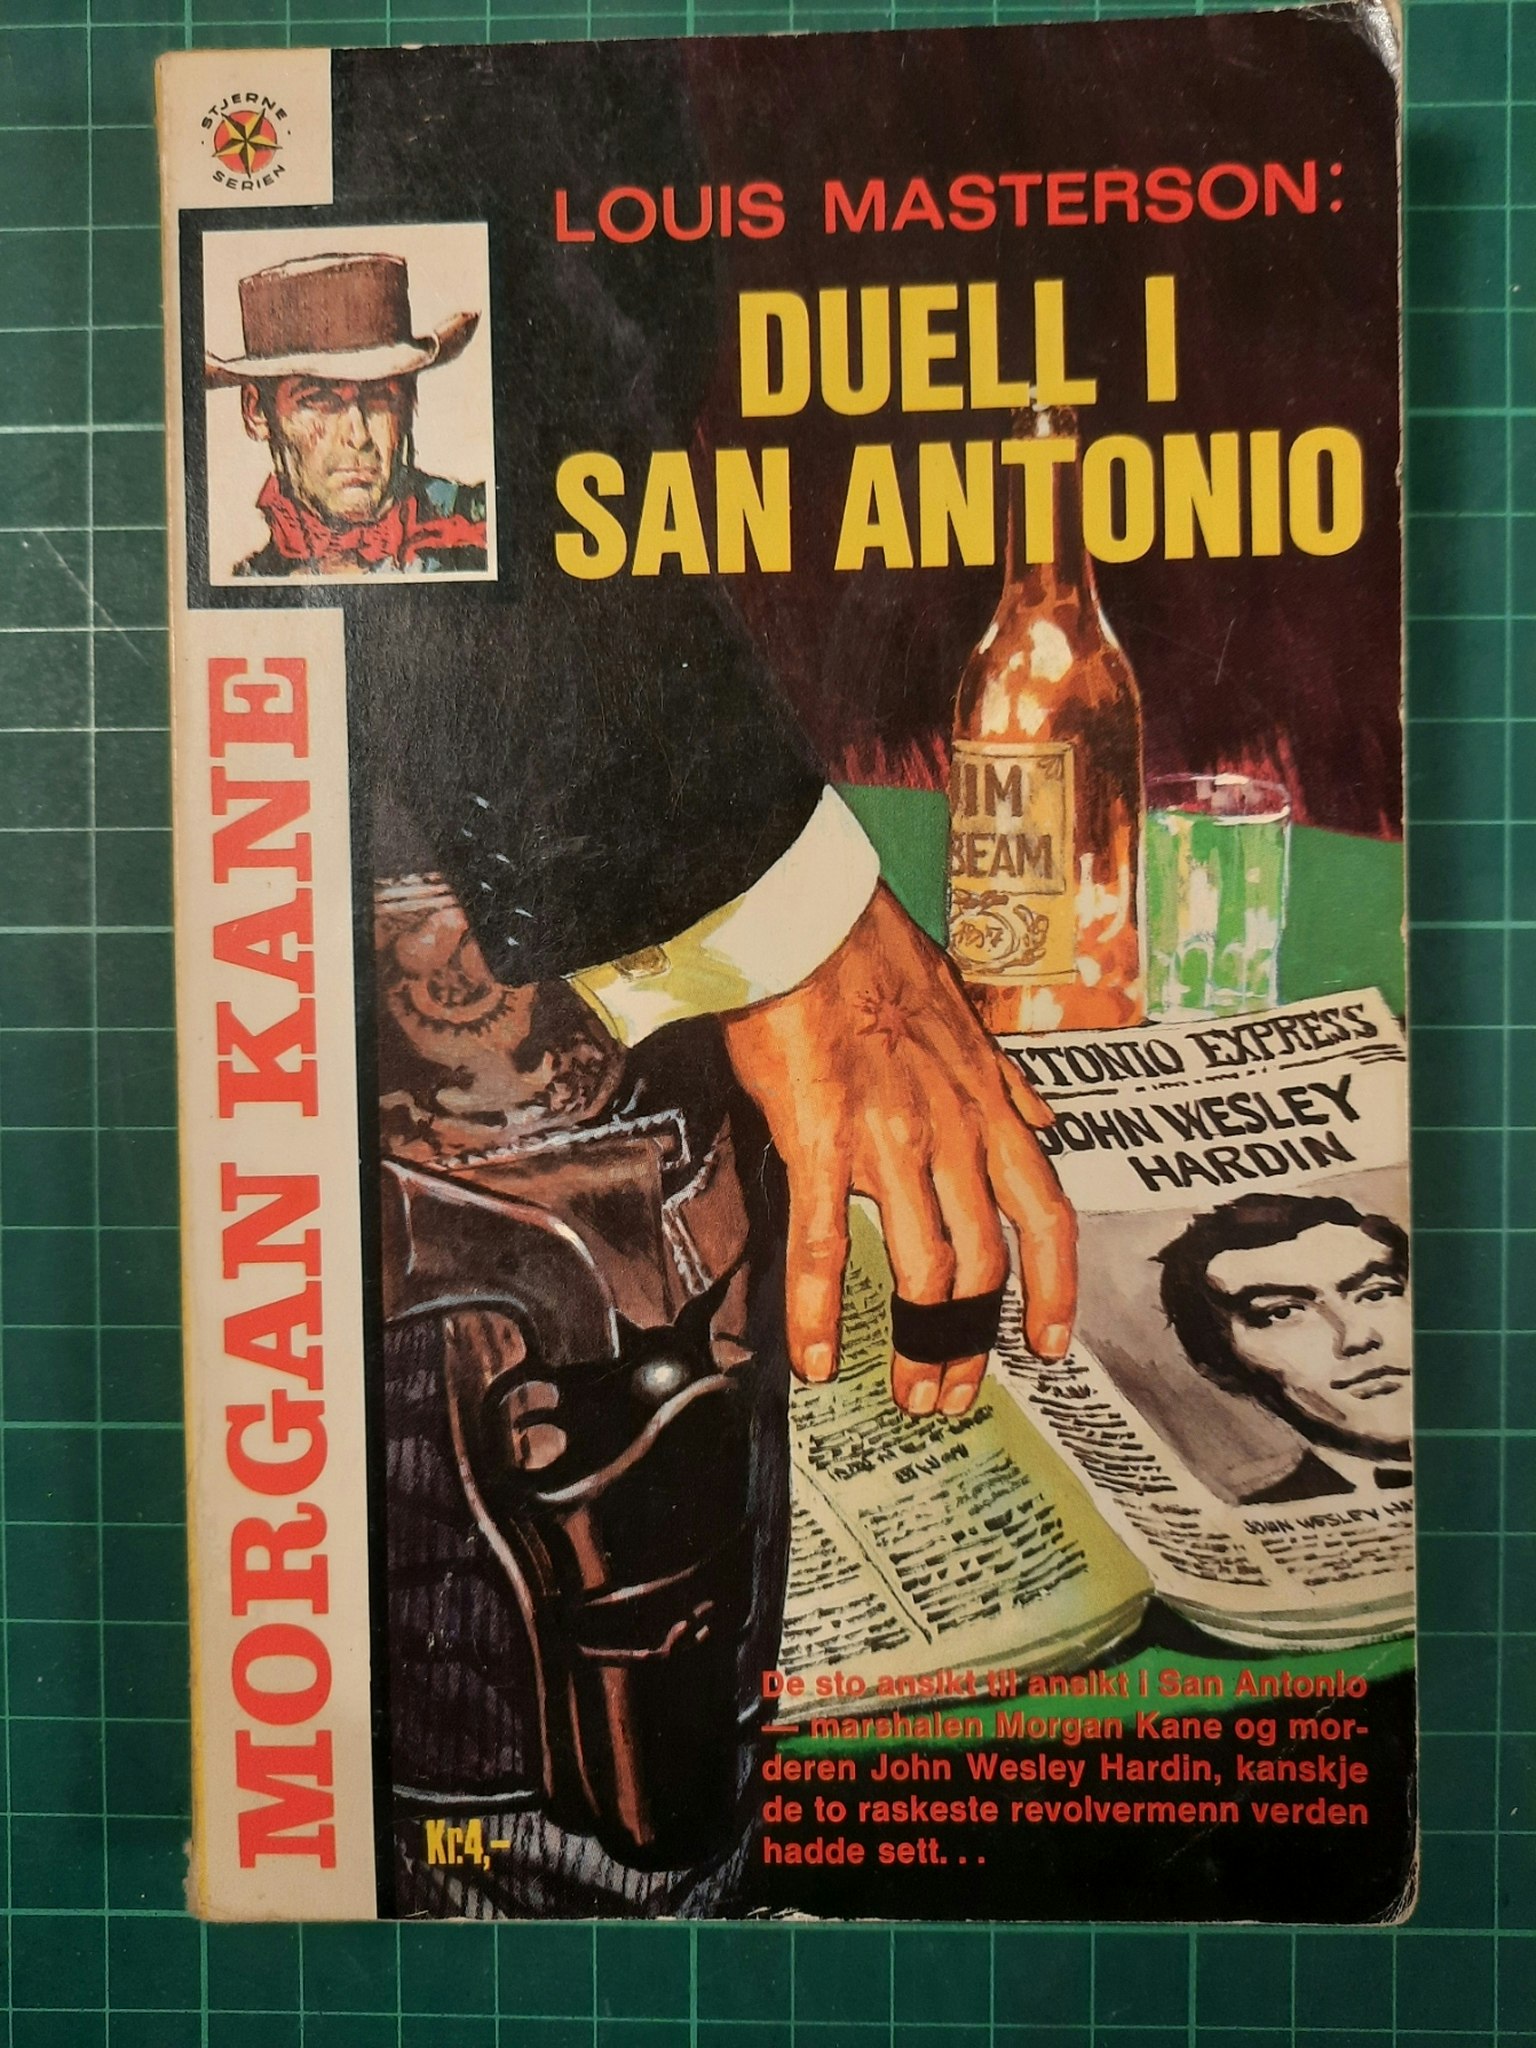 Morgan Kane pocket 57 Duell i San Antonio